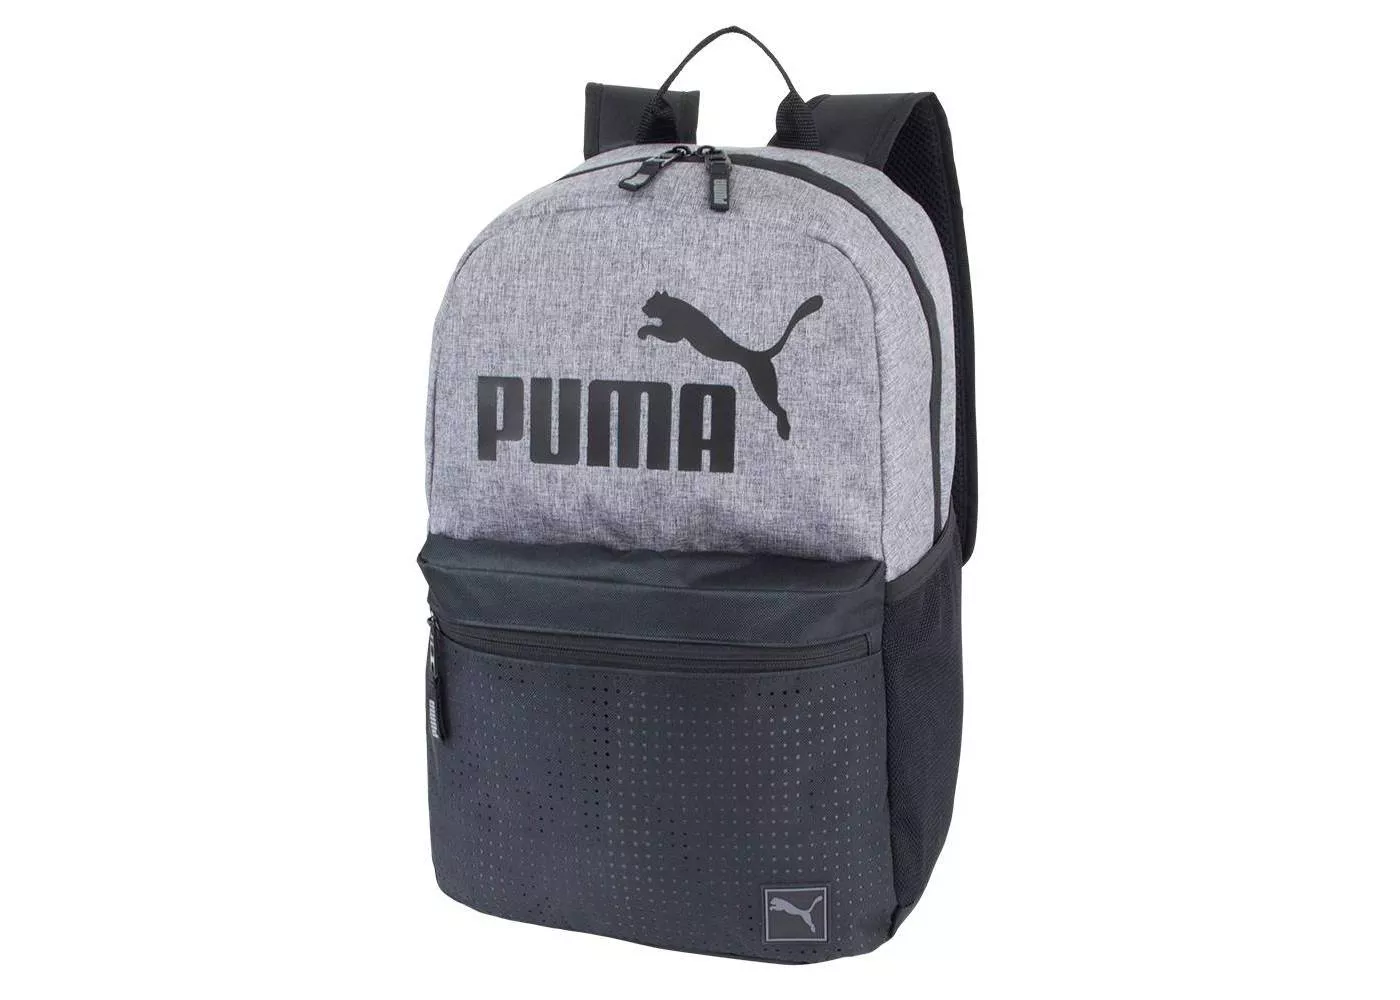 Puma 18.5" Backpack - Heather Gray/Black - image 1 of 4